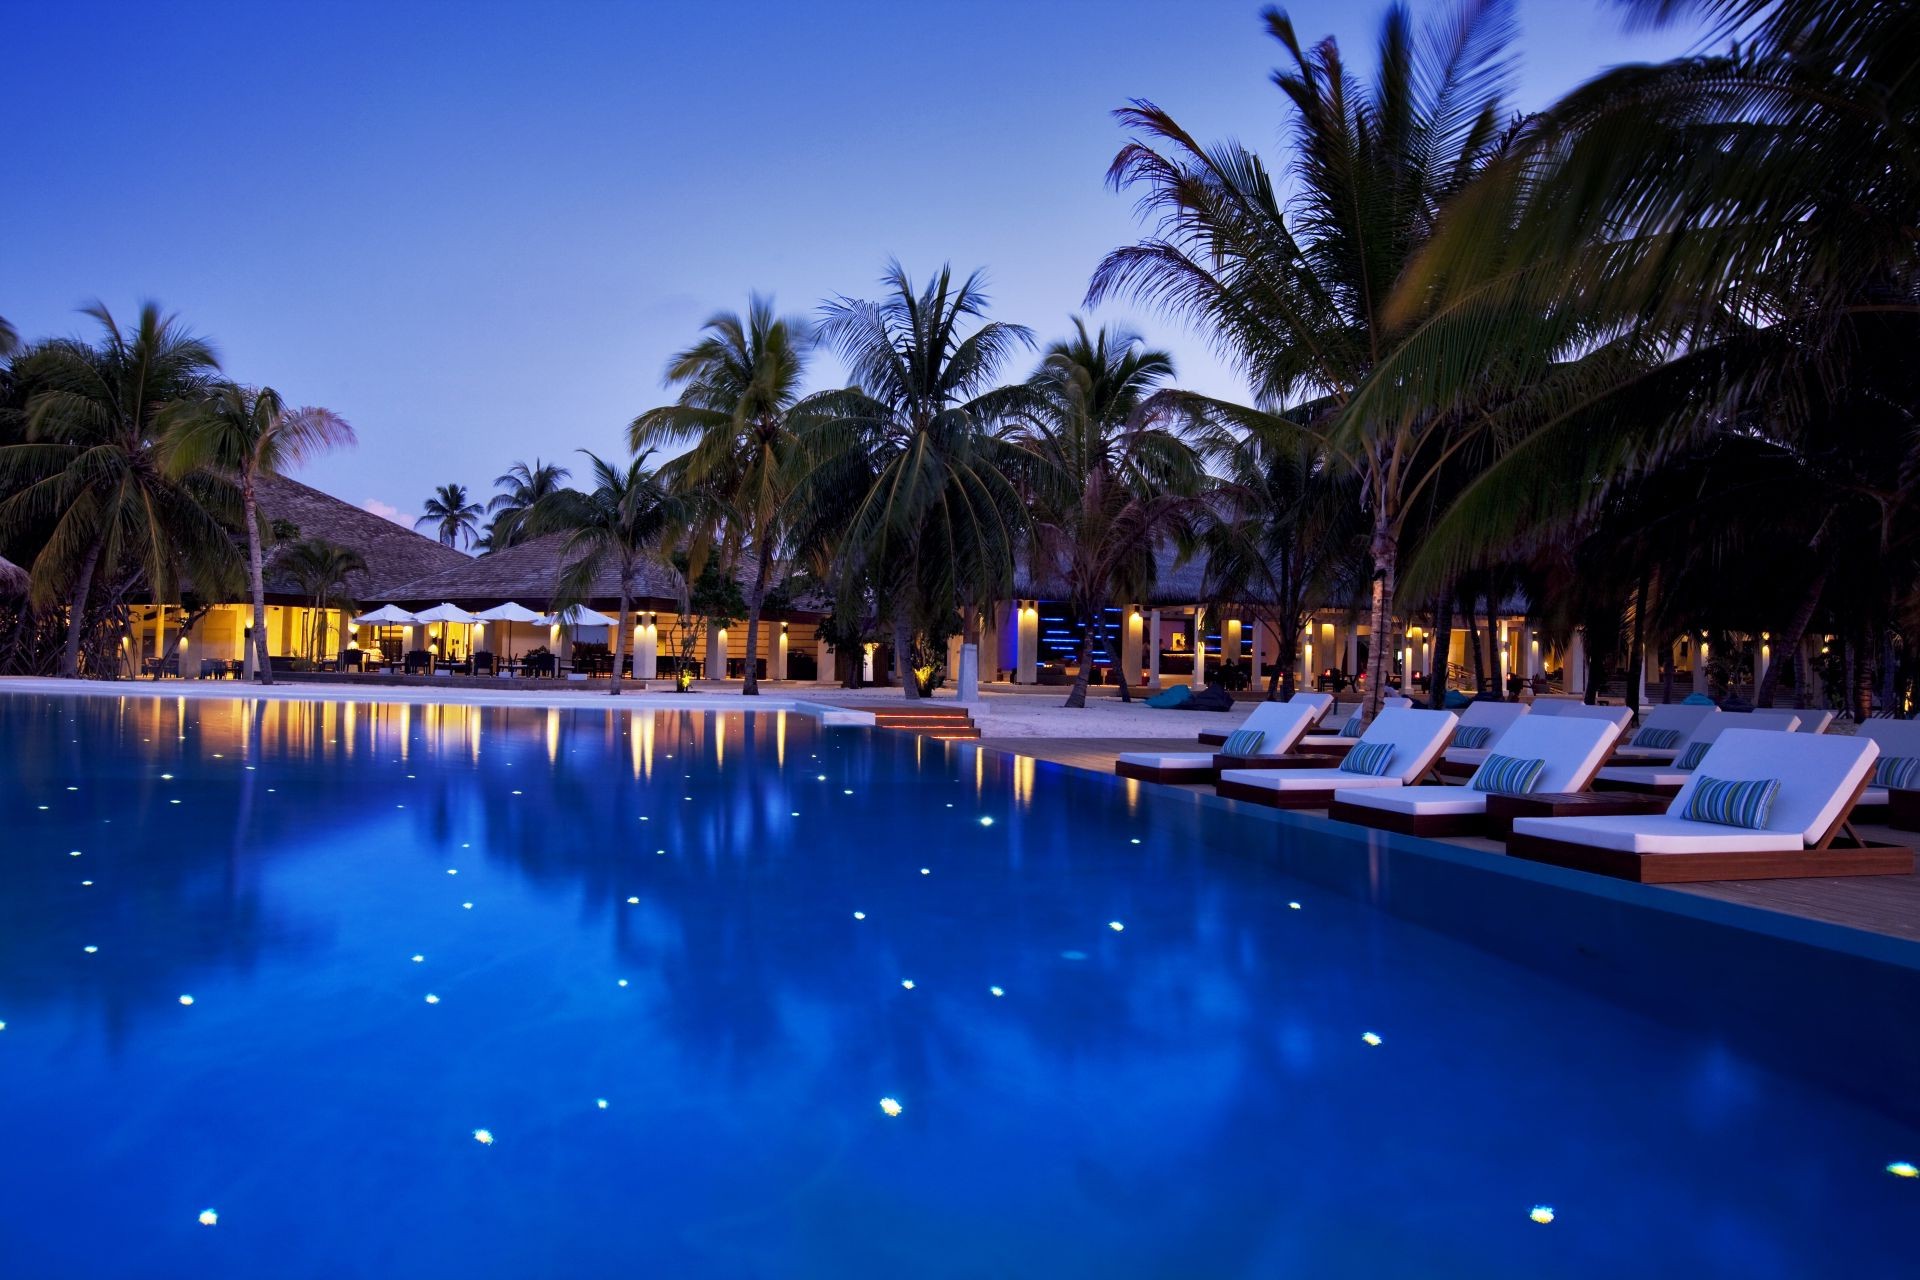 night evening twilight resort tropical travel palm hotel vacation water exotic pool luxury beach relaxation leisure swimming swimming pool idyllic sun summer ocean